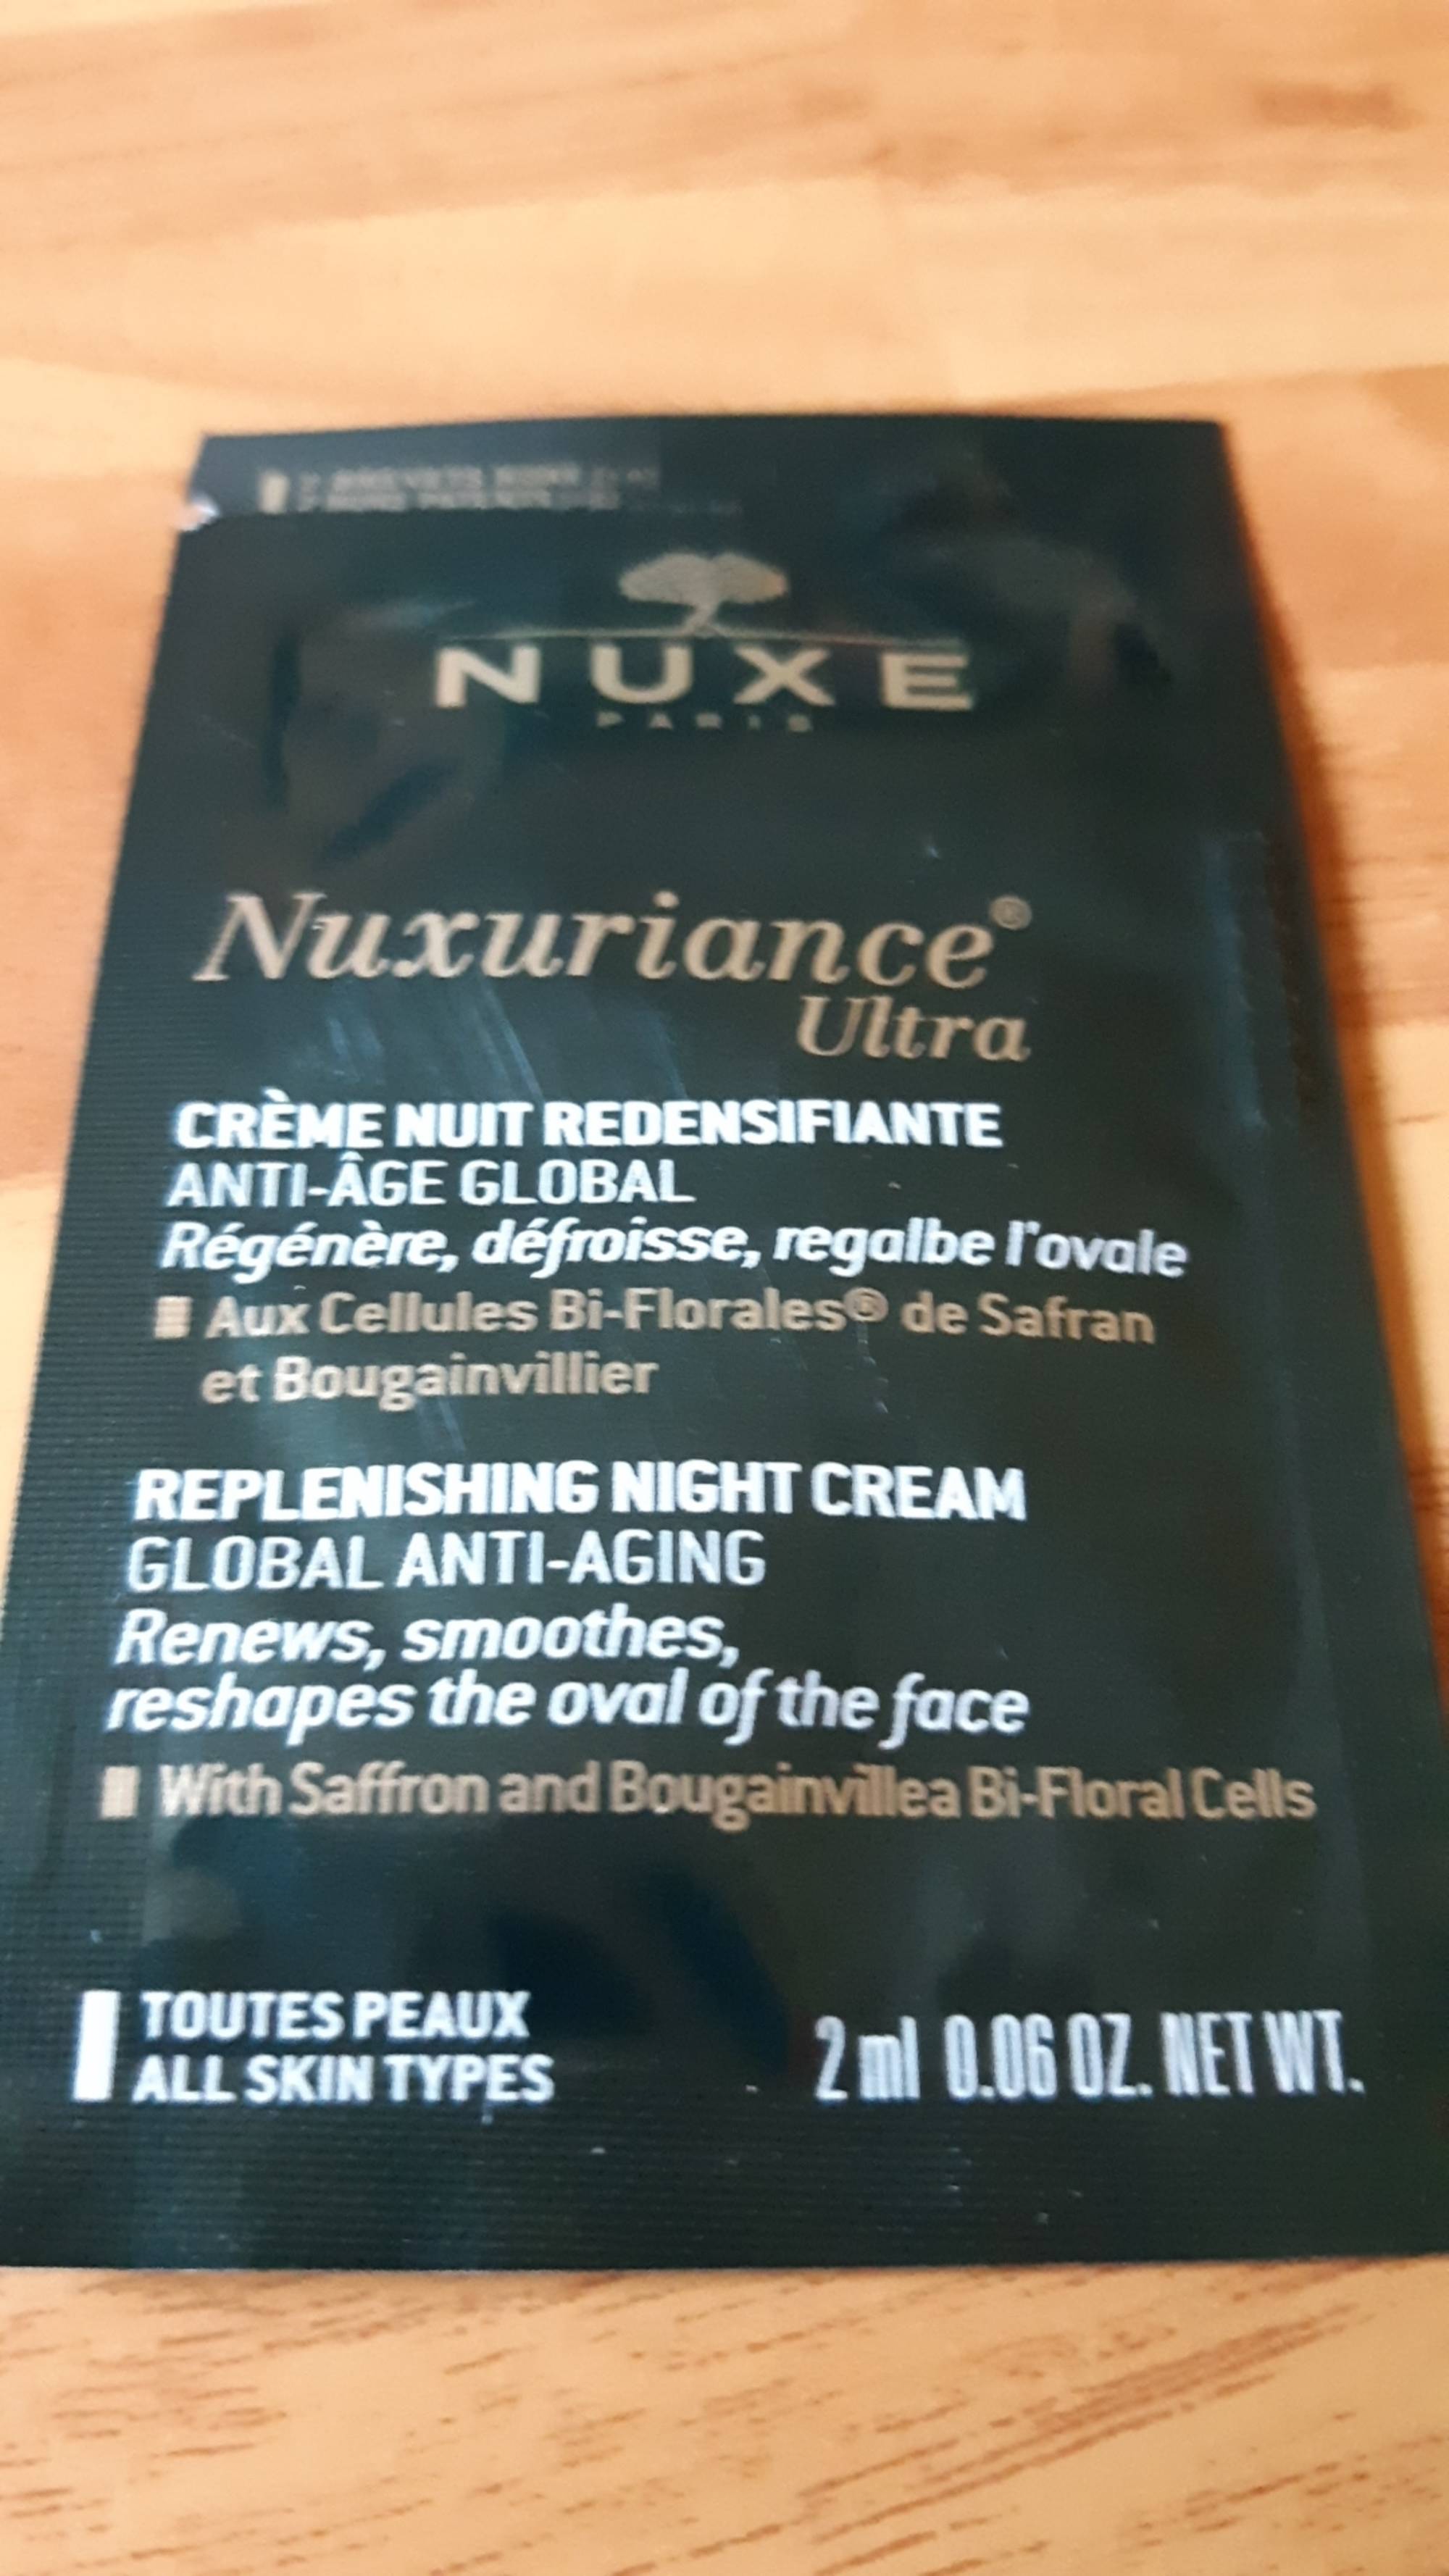 NUXE - Crème nuit redensifiante anti-âge global